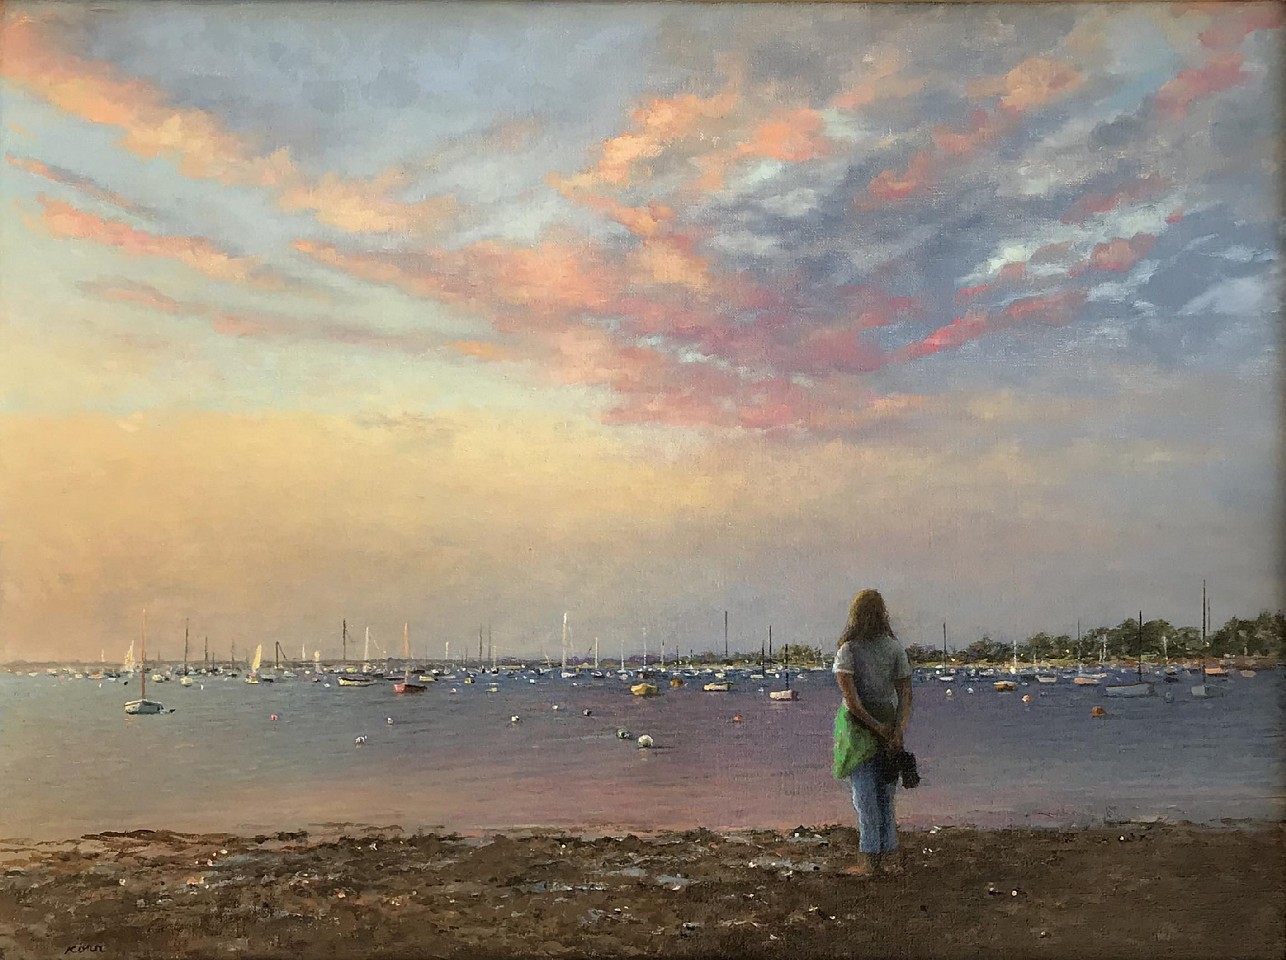 Marla Korr, Sunset at Washington St., 2018
oil on canvas, 18 x 24 in. (45.7 x 61 cm)
MK180407